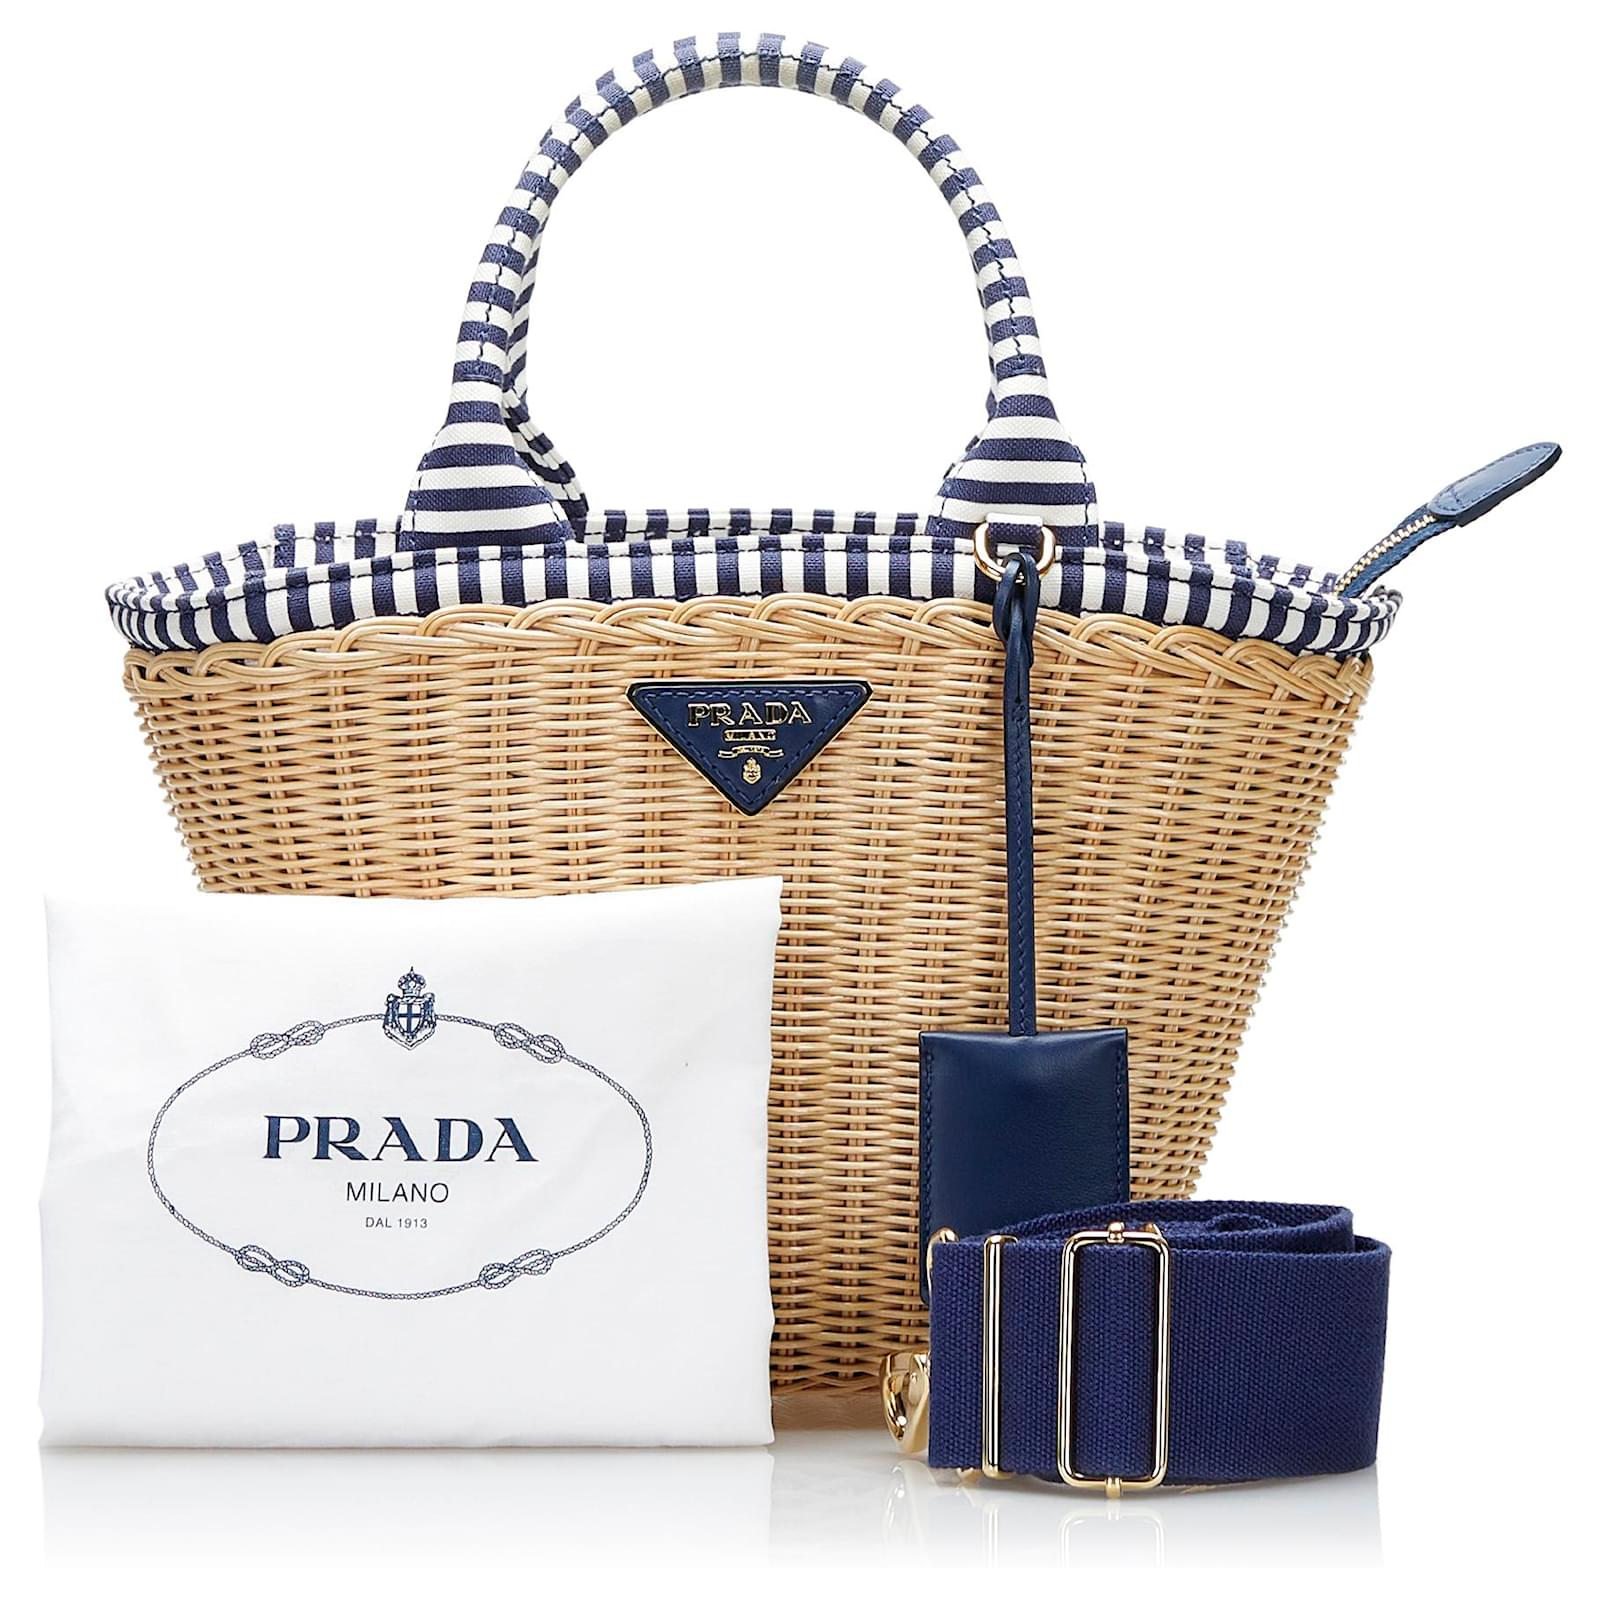 Prada Wicker And Canvas Basket Bag  Bags, Wicker bags, Bags designer  fashion